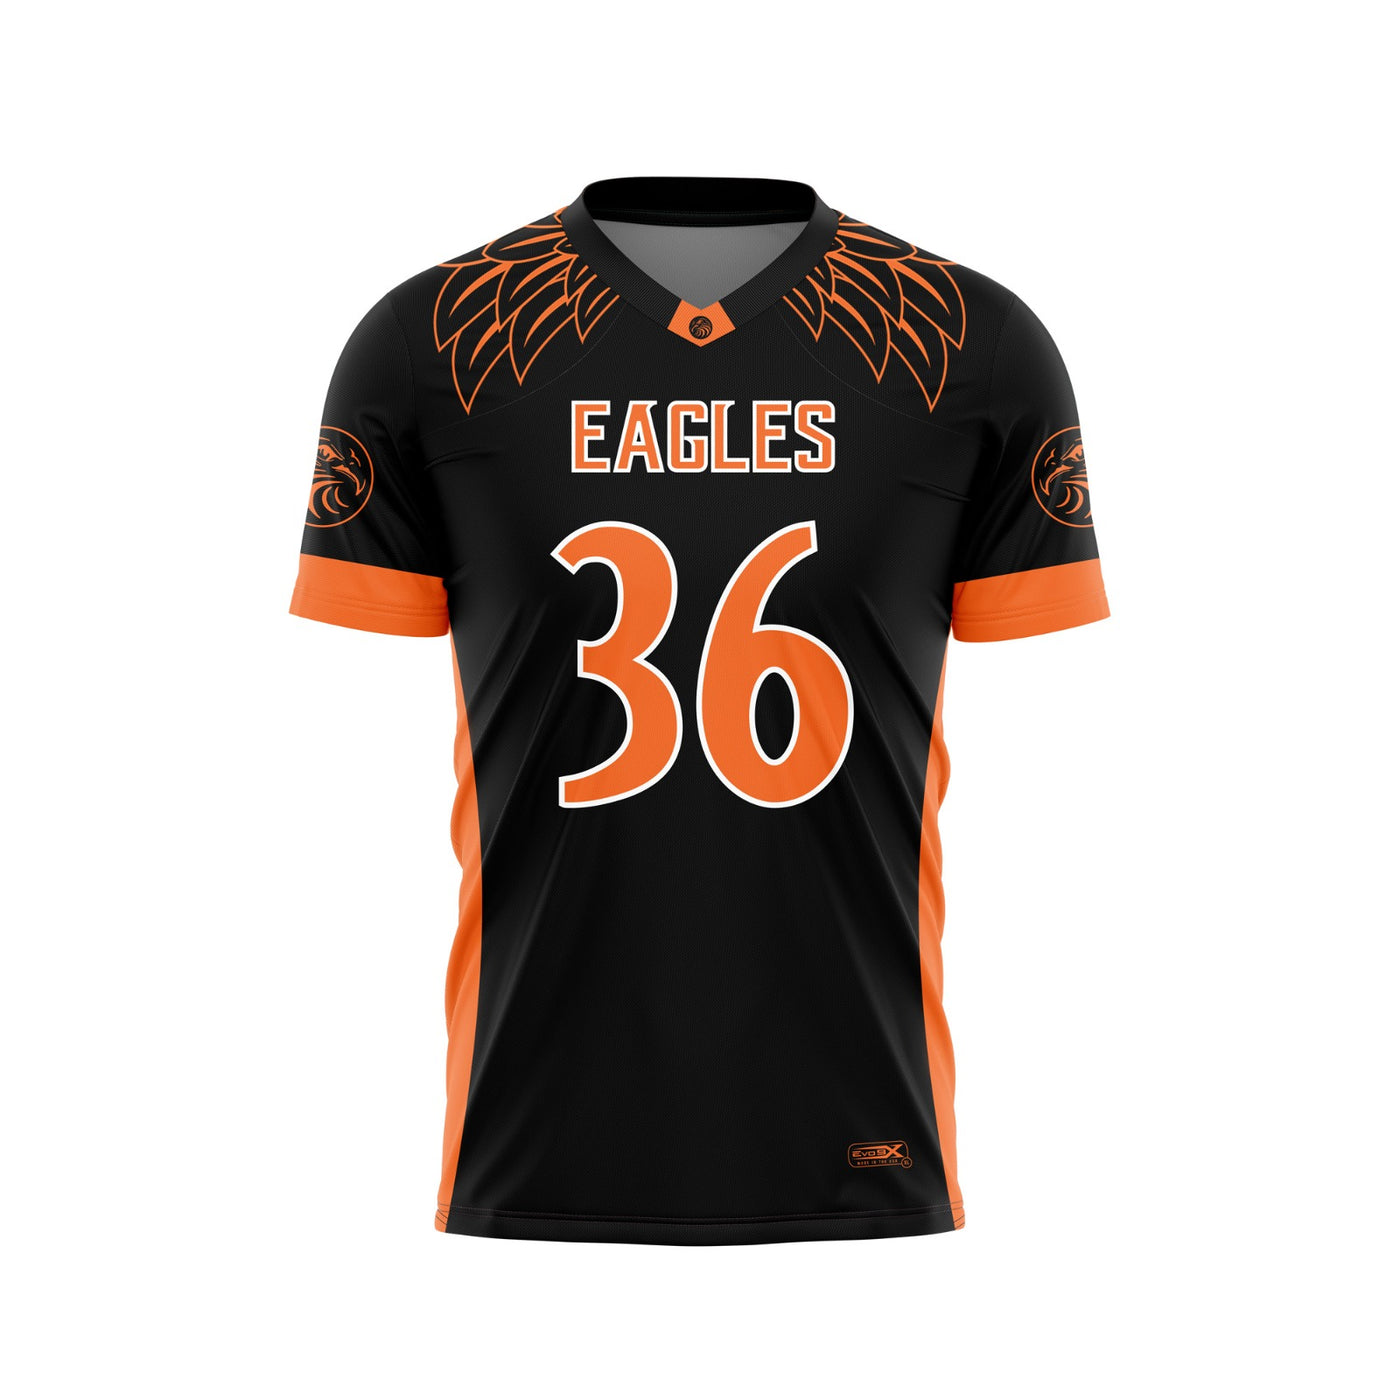 Eagles Custom Dye Sublimated Baseball Jersey